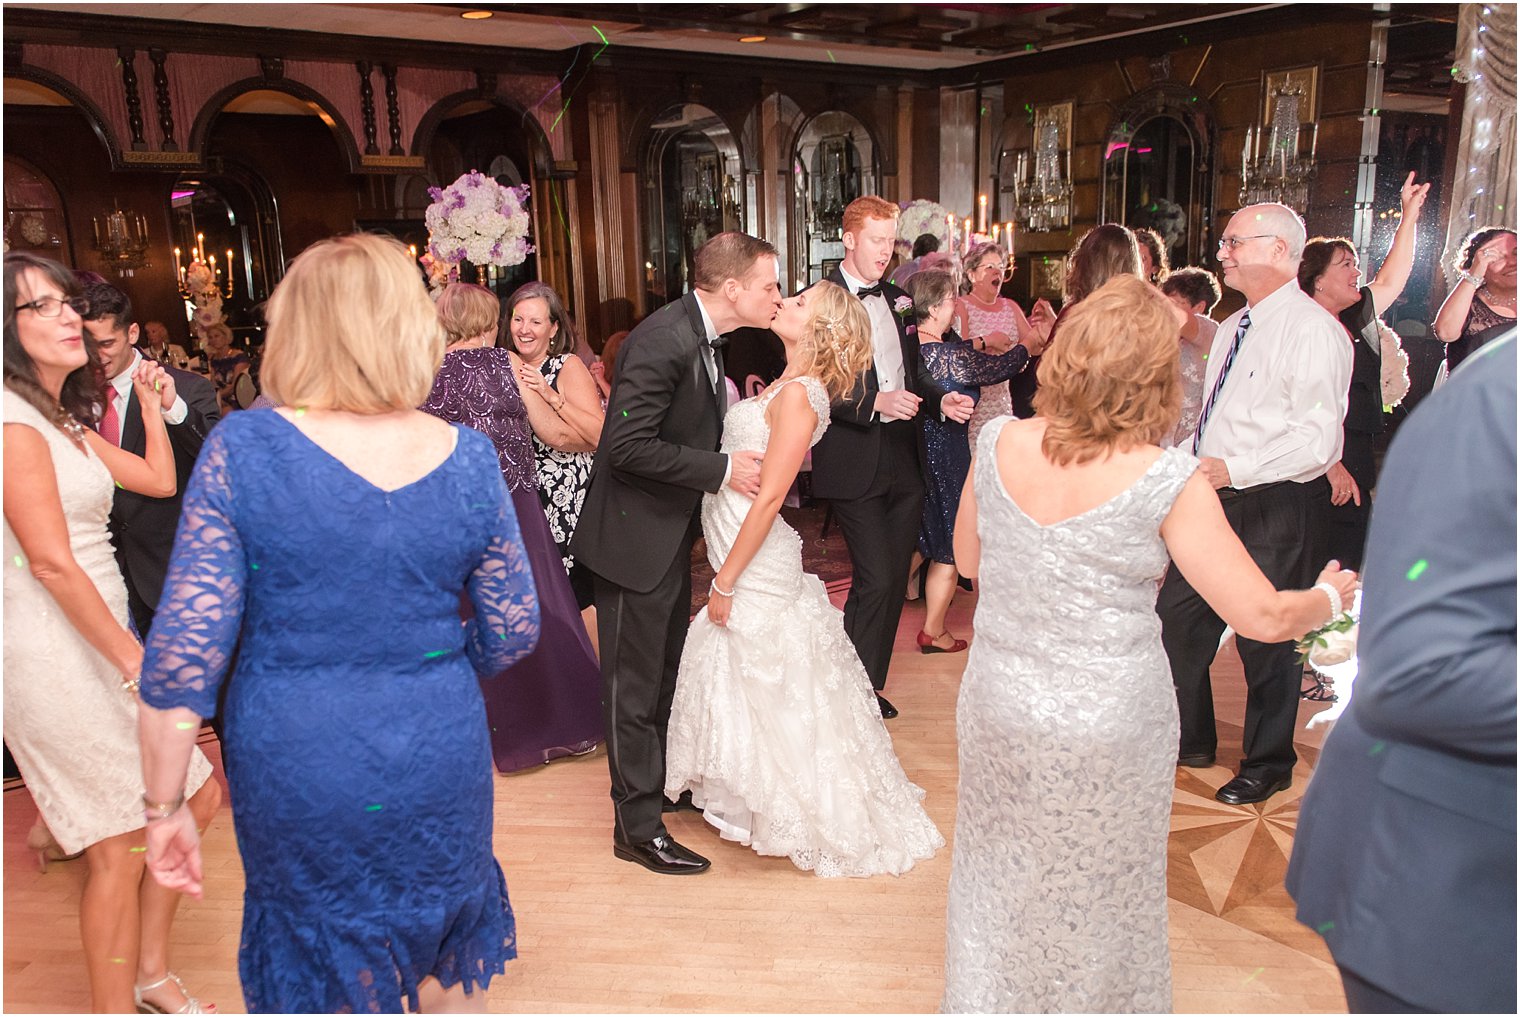 Wedding reception dancing photos at The Manor